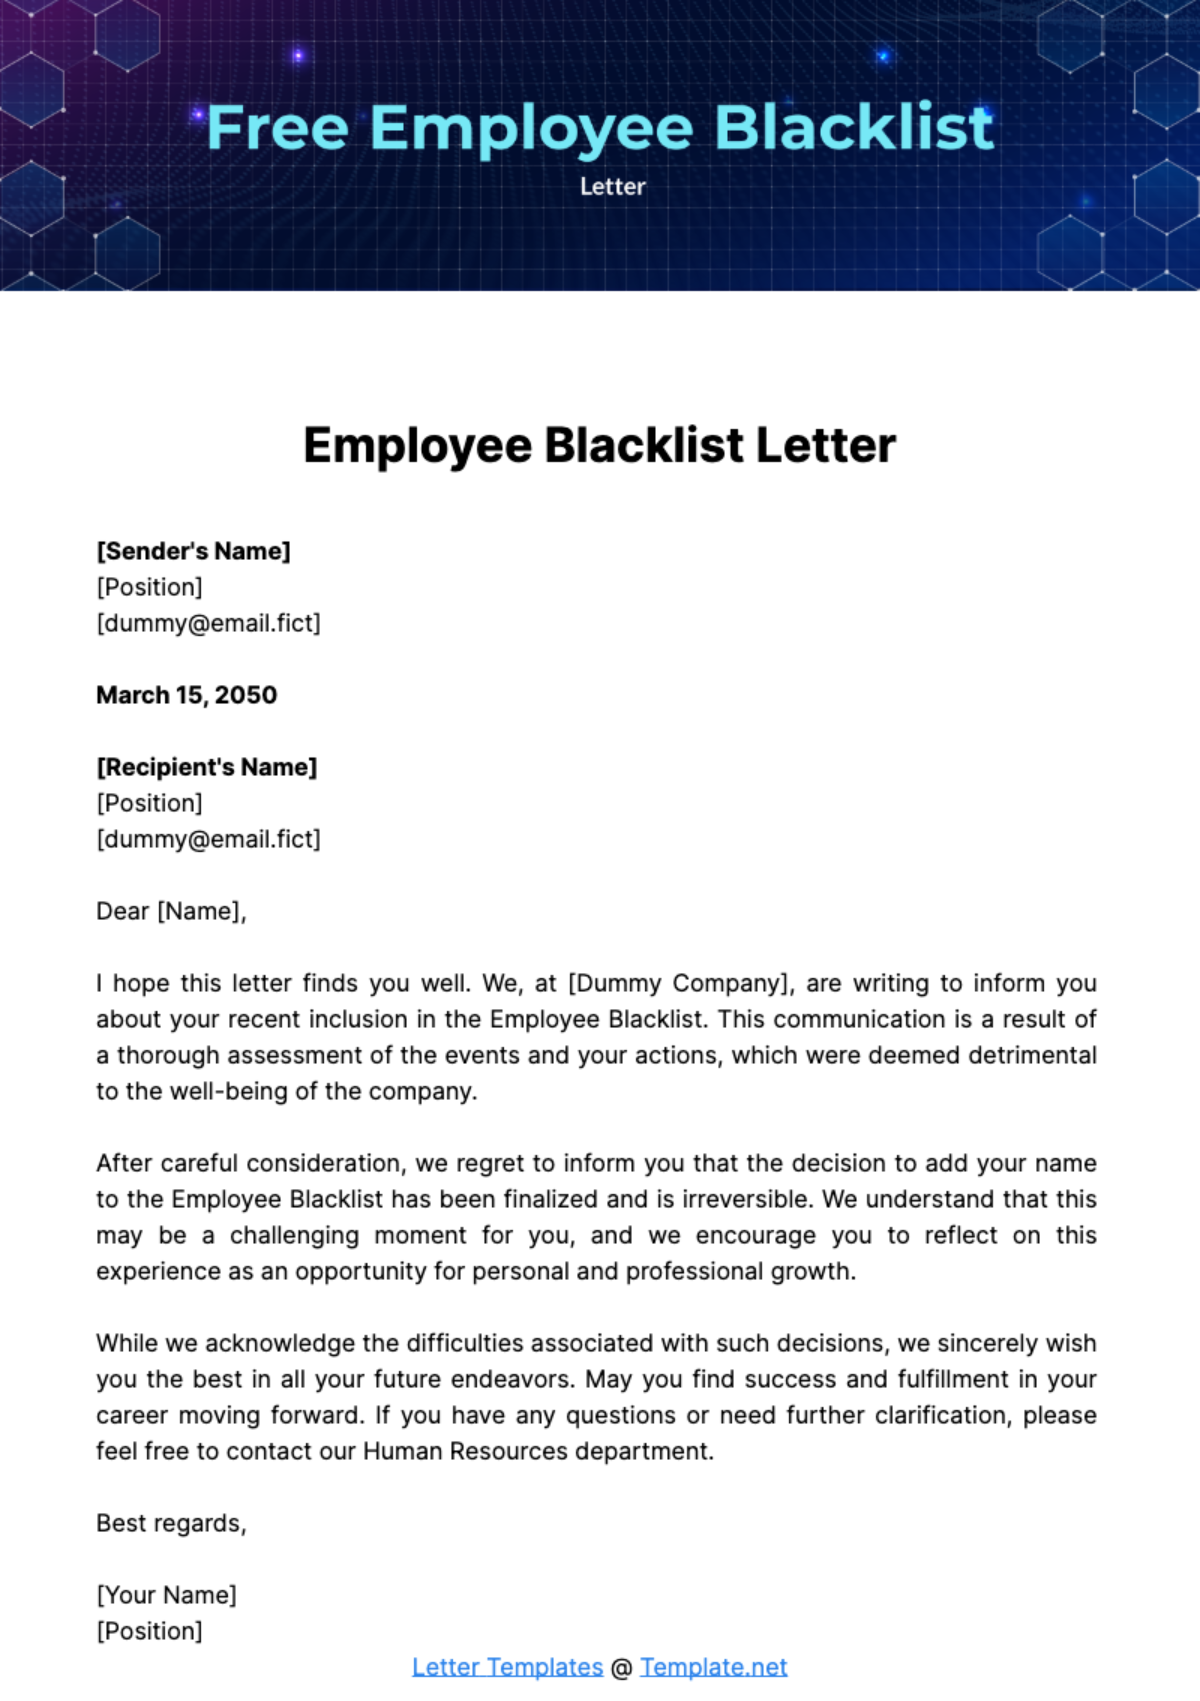 Free Employee Blacklist Letter Template